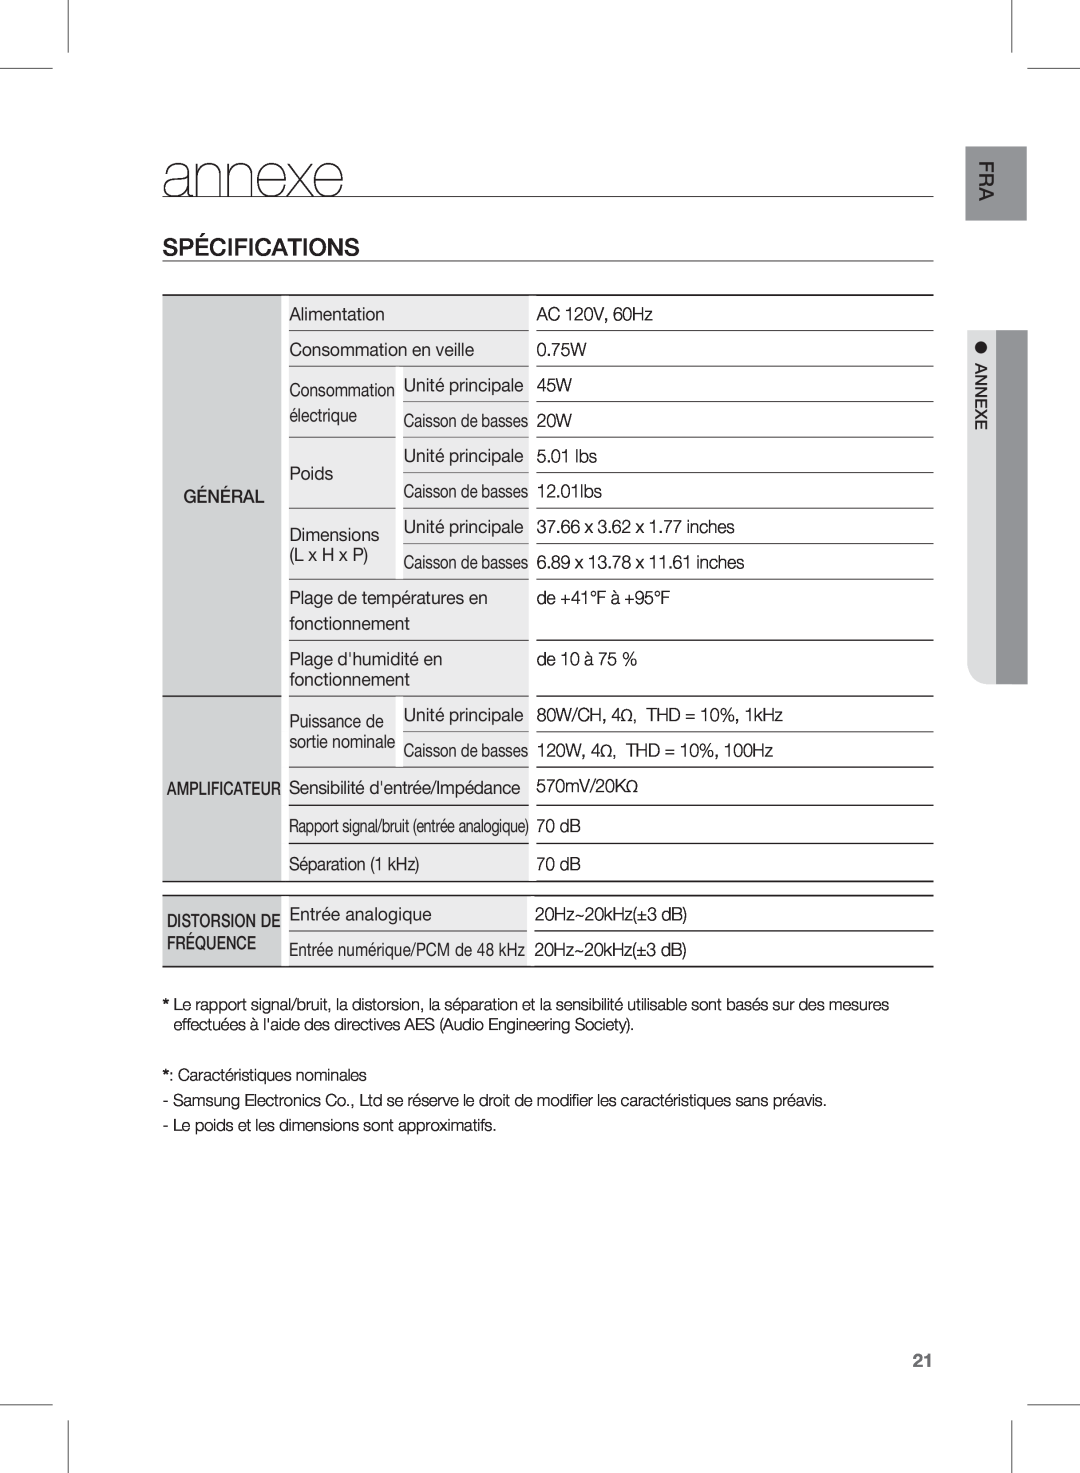 Samsung HW-D451, HW-D450 user manual annexe, Spécifications 